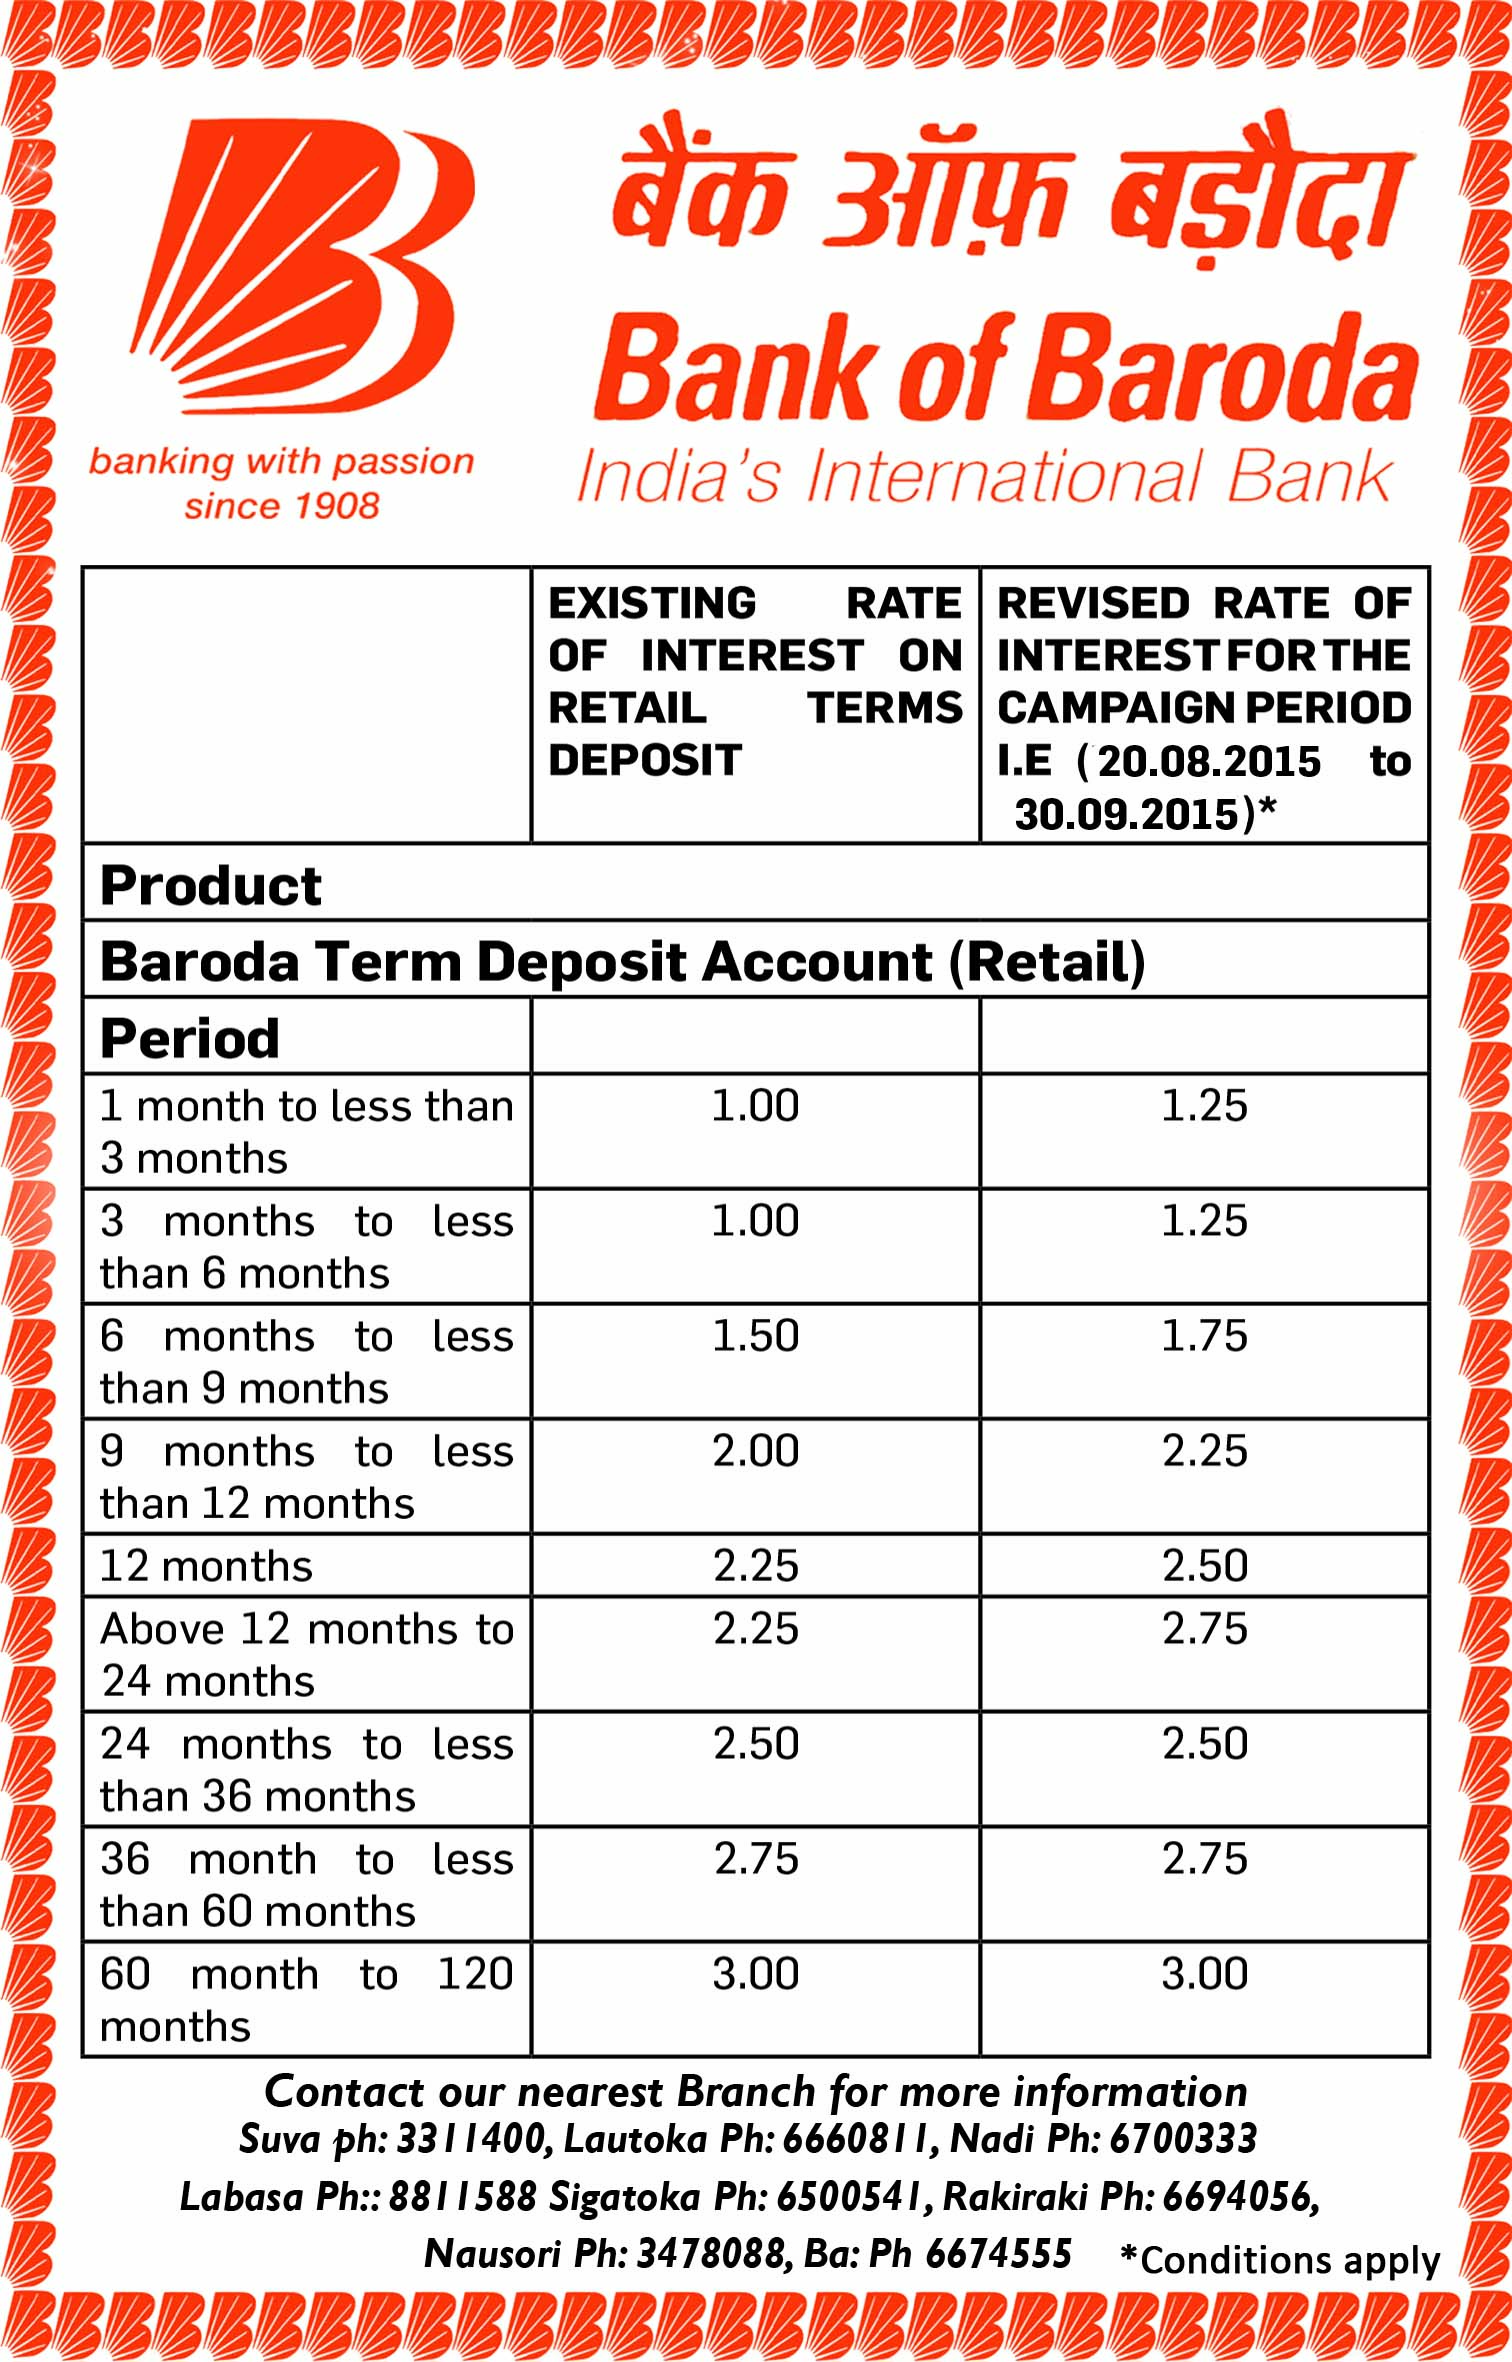 Bank Of Baroda Fixed Deposit Interest Rate